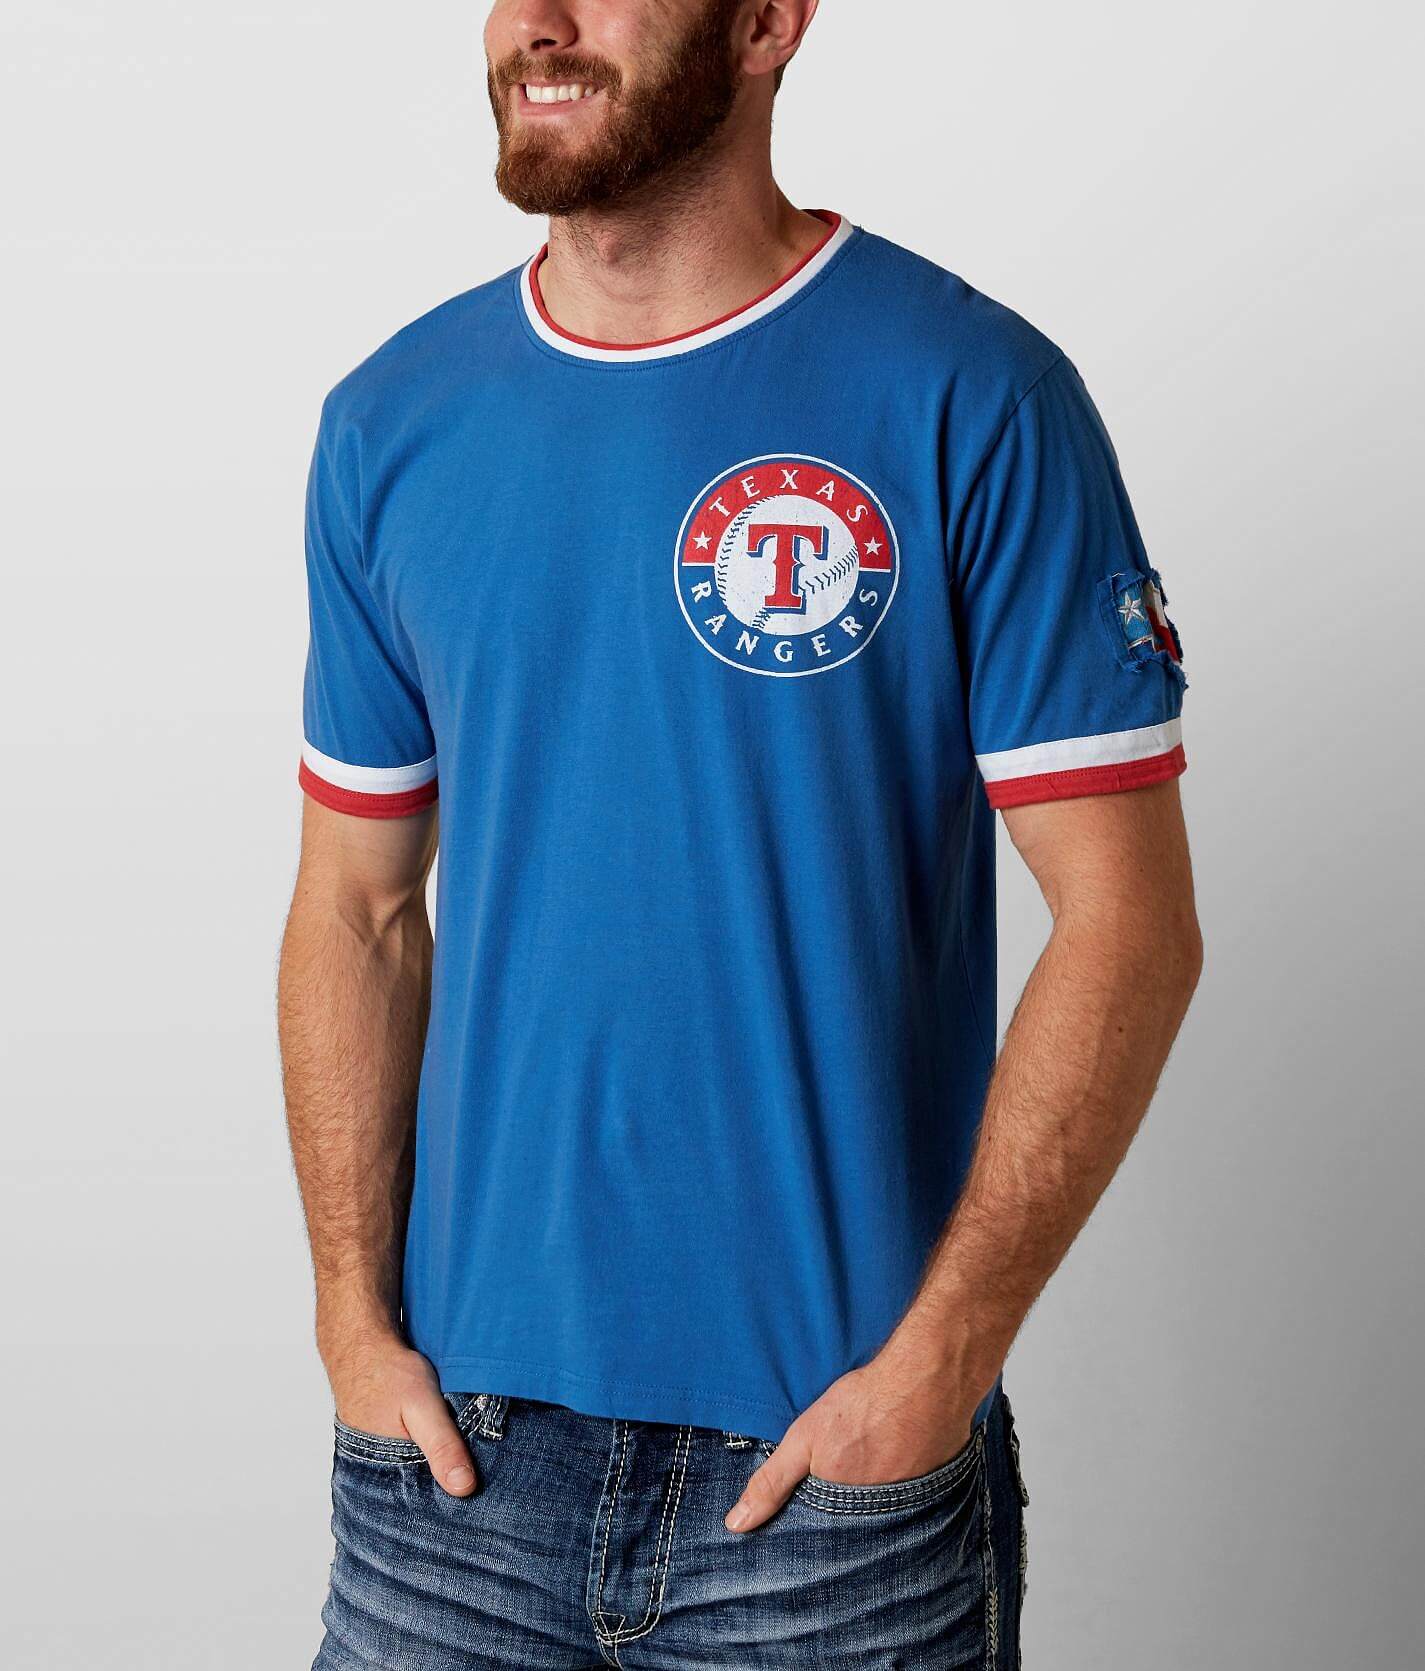 Red Jacket Texas Rangers T-Shirt - Men 